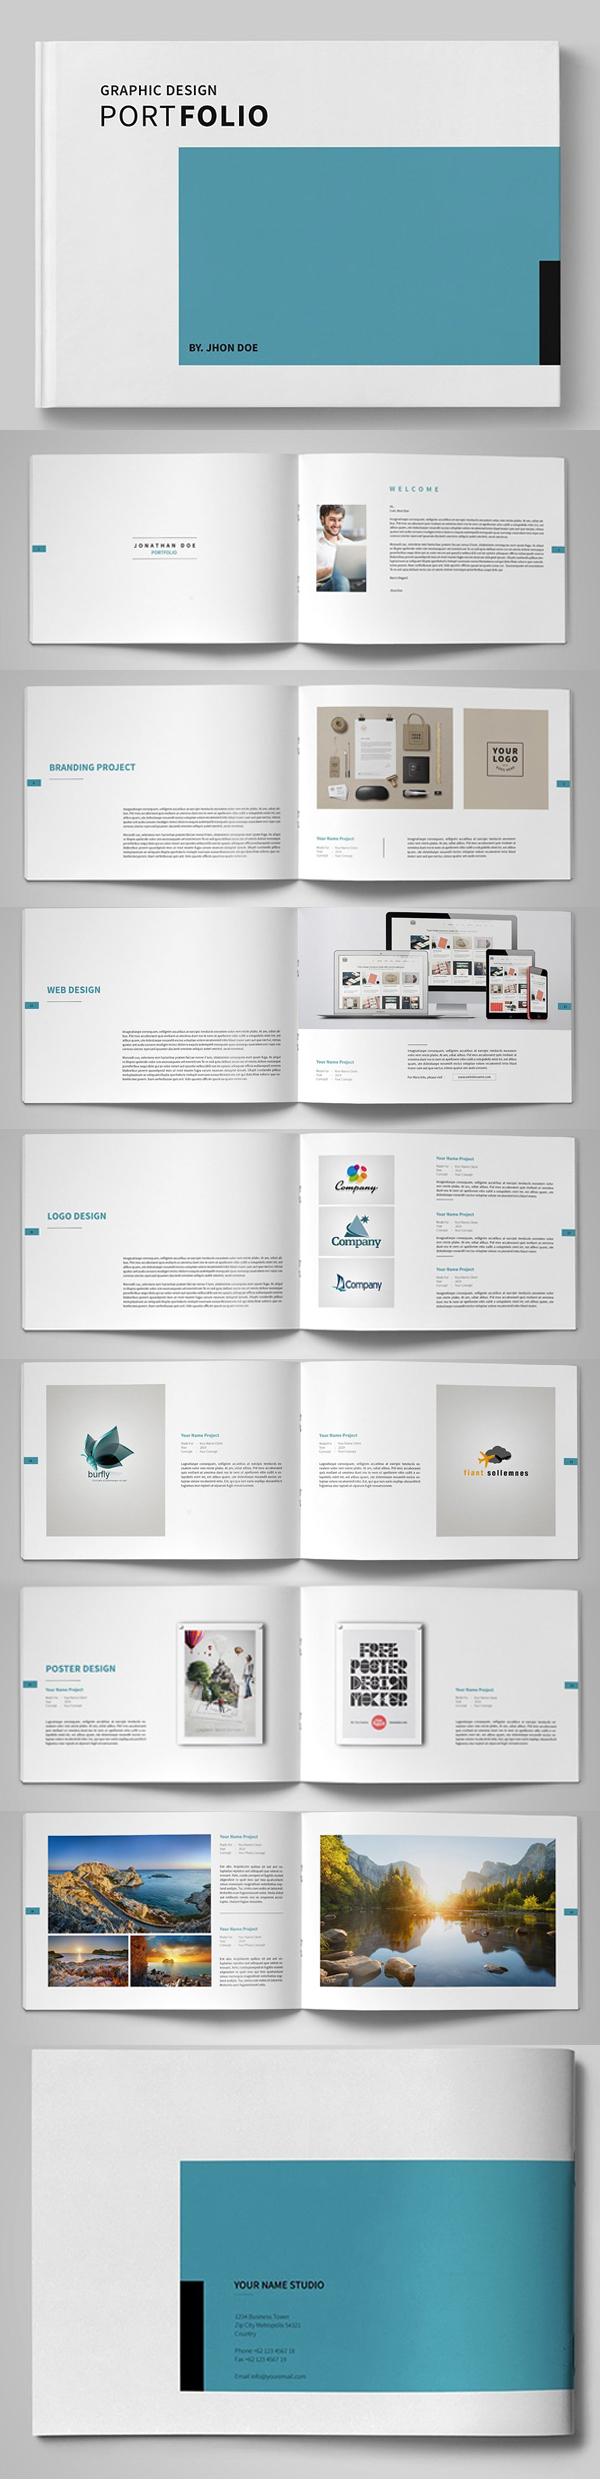 Graphic Design Portfolio Brochure Template